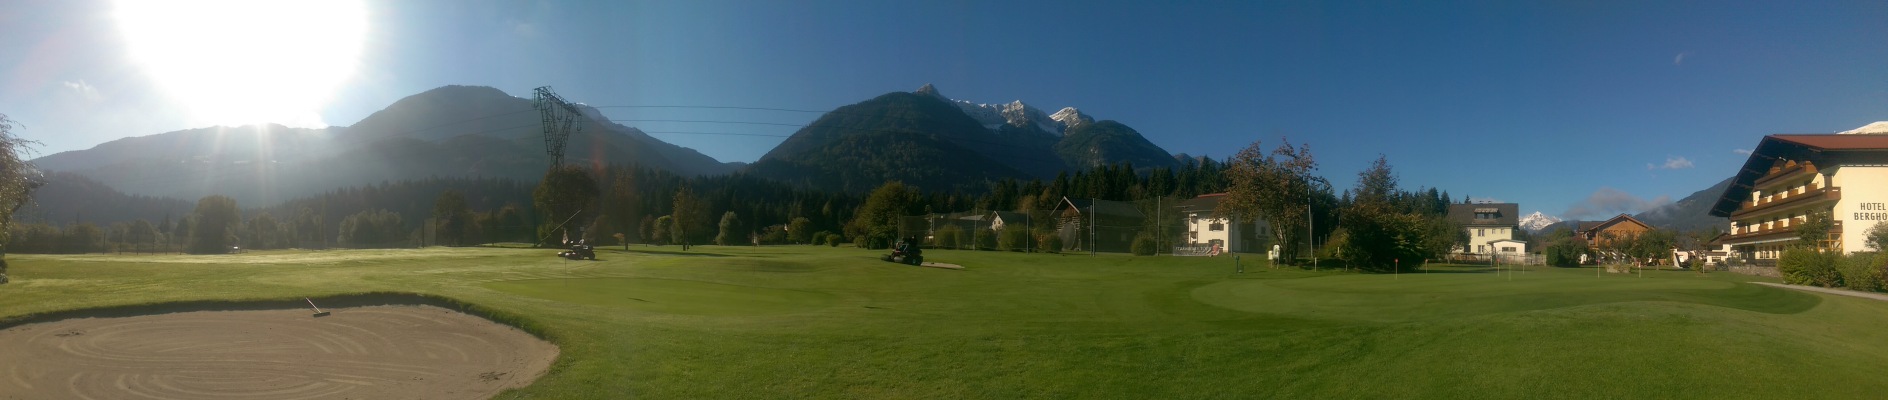 Golfplatz Panorama